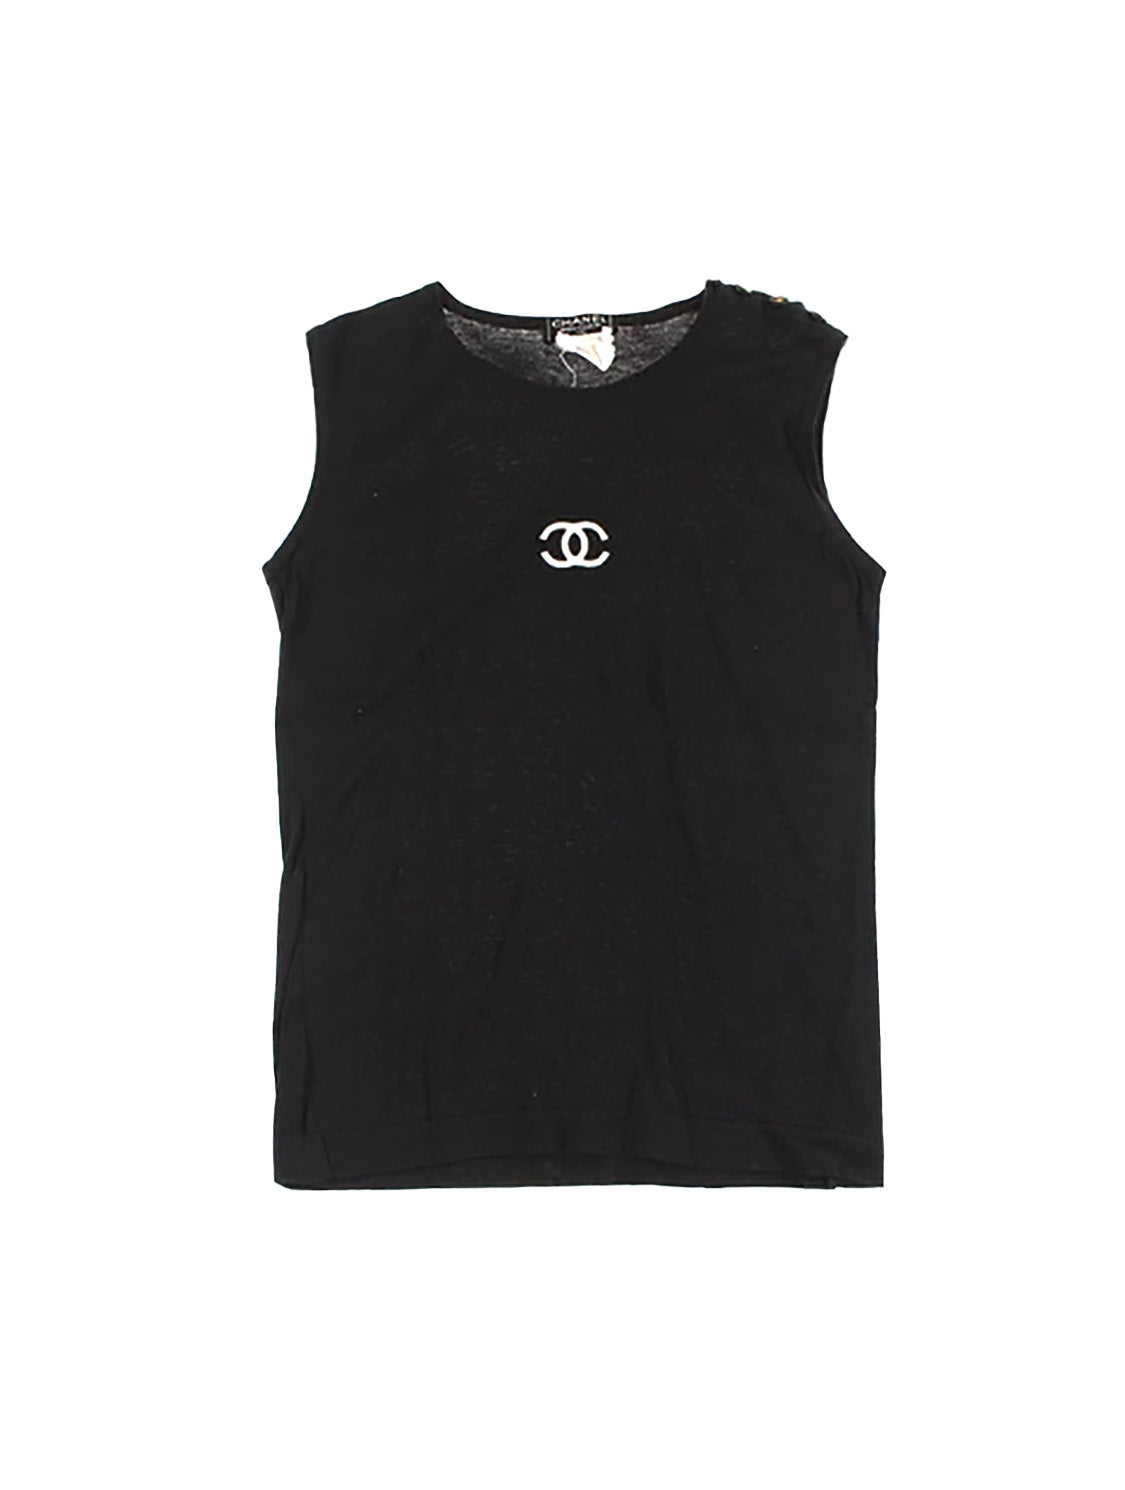 Chanel 23P Black White CC Logo Ribbed Hem Stretch Cotton Knit Top Tank Shirt  38  eBay